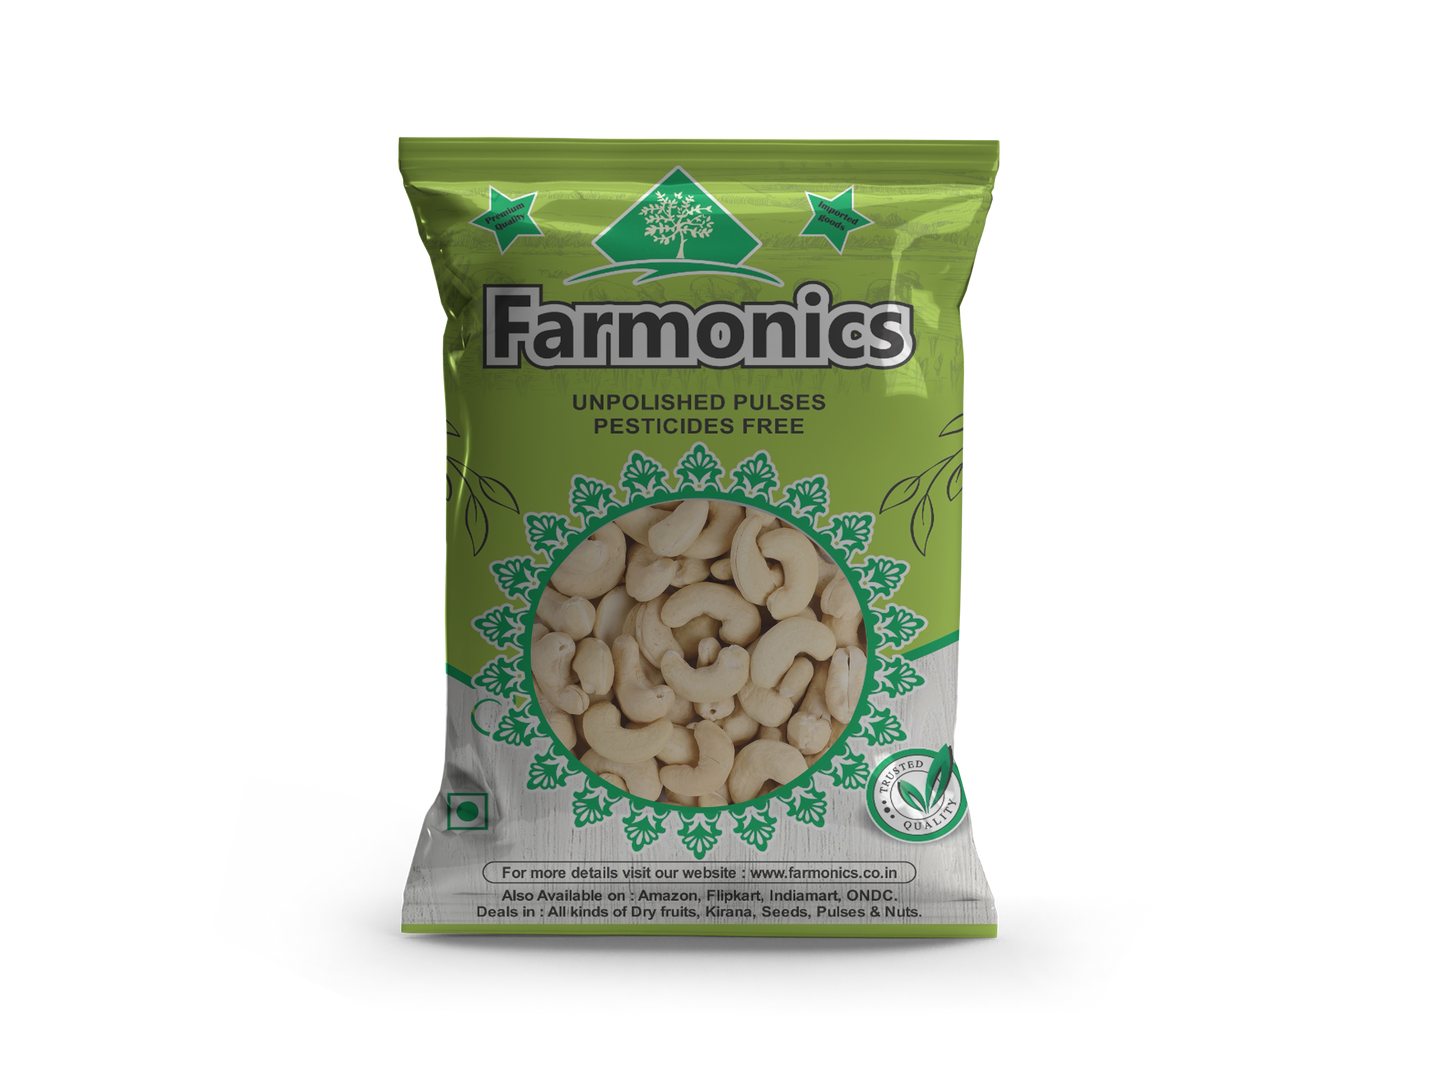 Buy cashews online at Farmonics